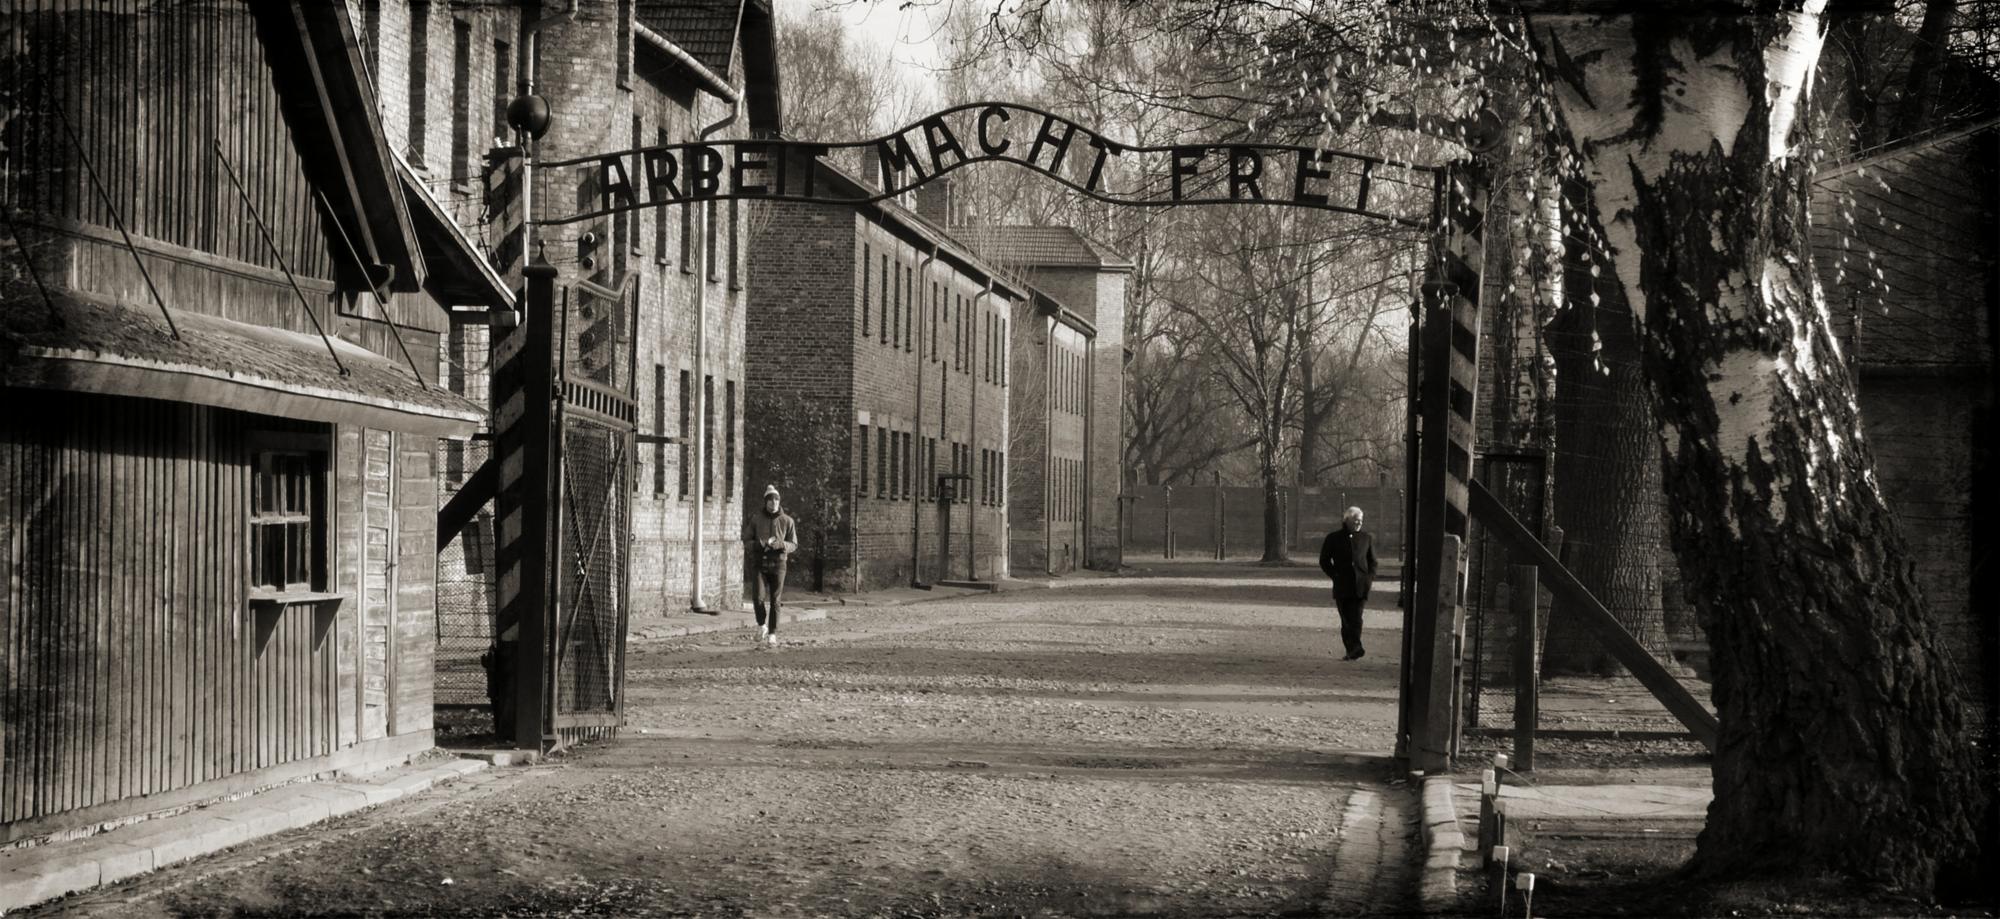 Vernichtungslager Auschwitz (c) DzidekLasek / cc0 – gemeinfrei / Quelle: pixabay.com